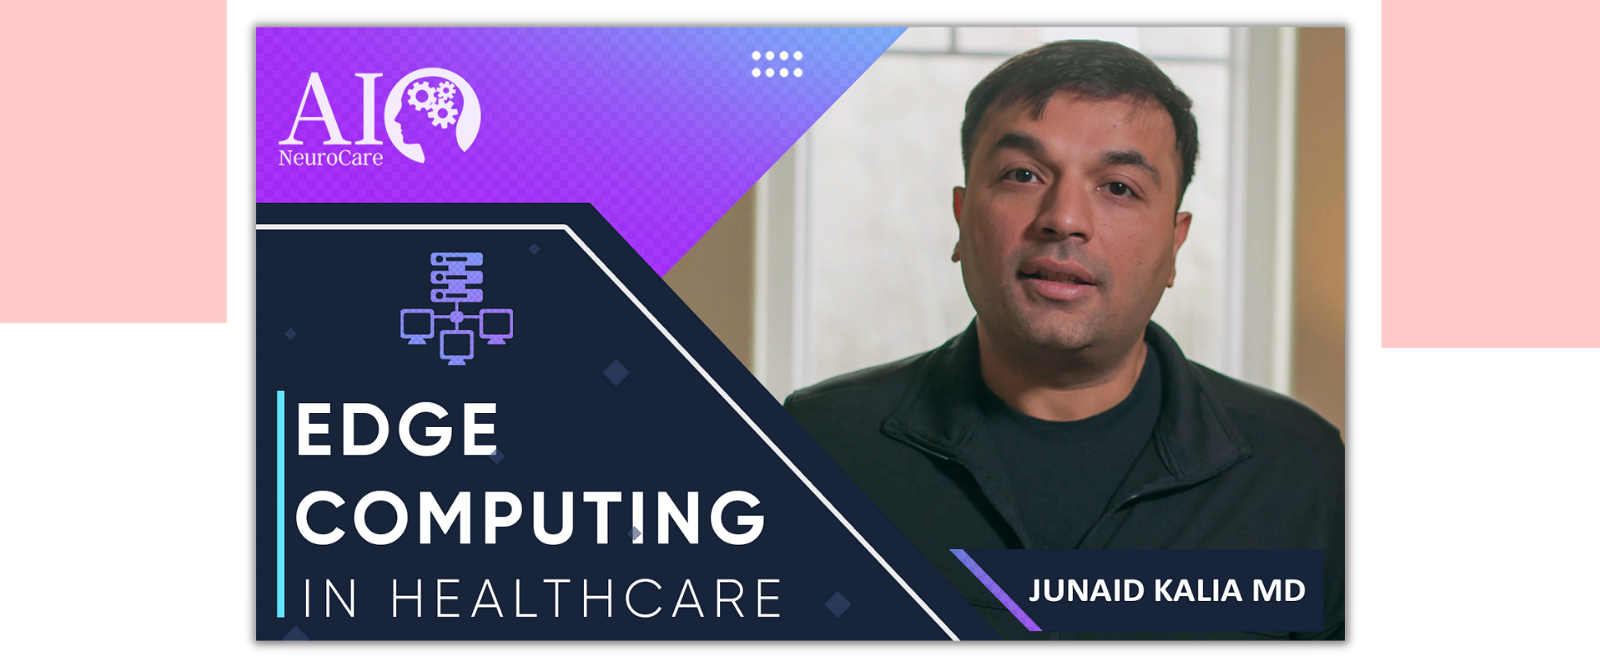 Edge Computing in Healthcare